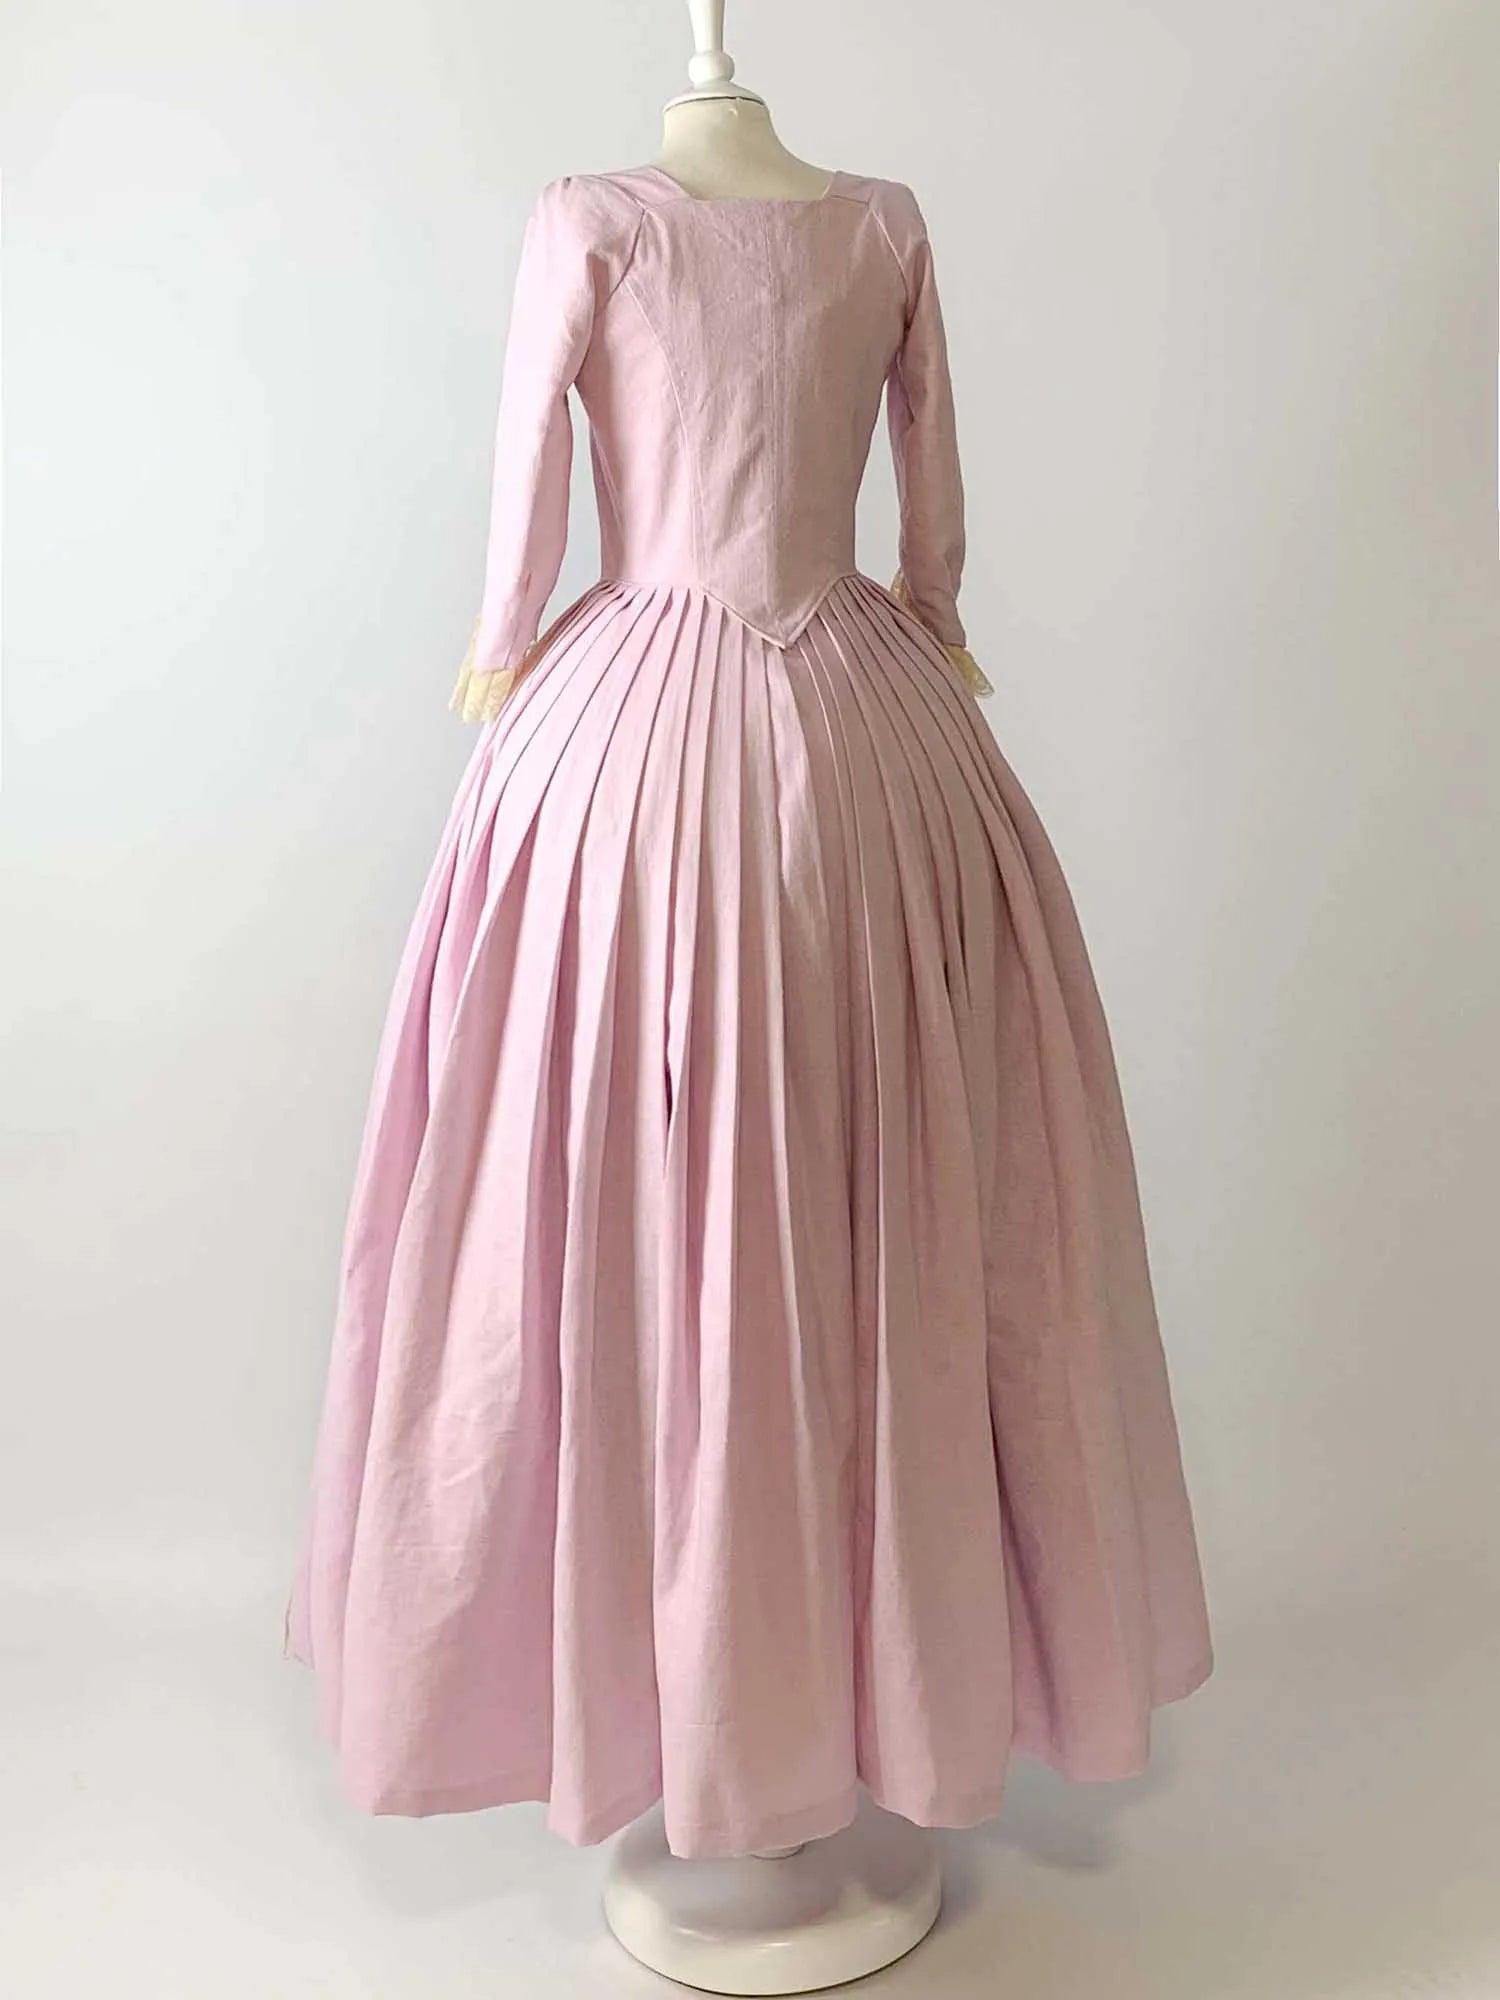 LOUISE, 18th-Century Dress In Light Pink Linen - Atelier Serraspina